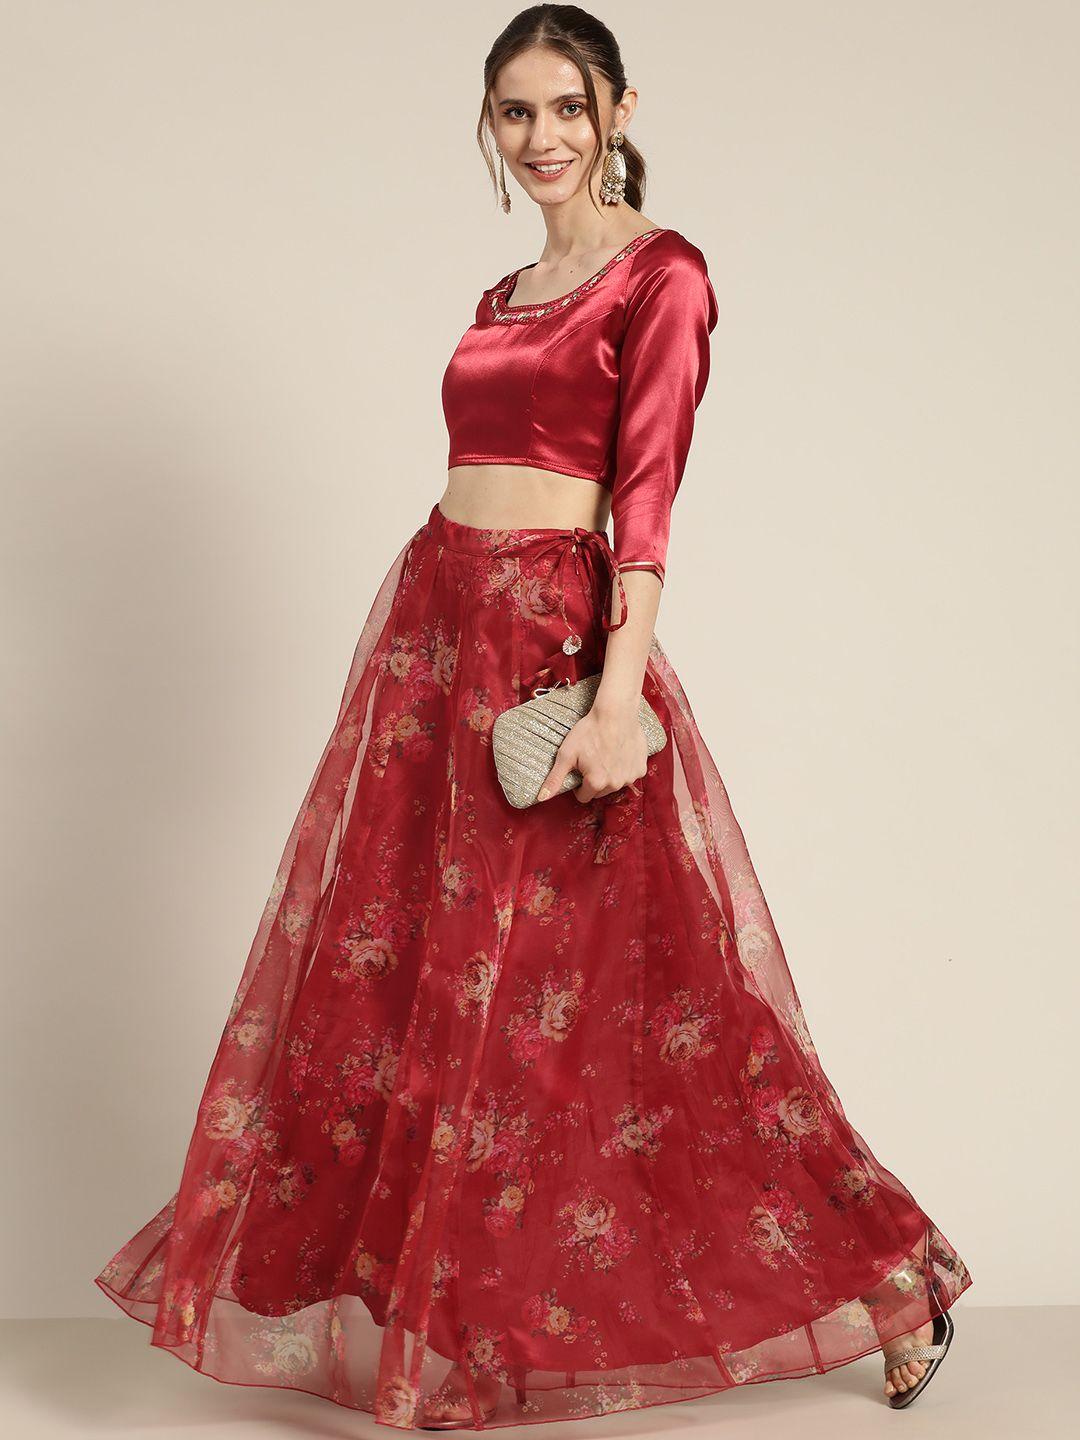 shae by sassafras maroon floral paneled organza flared skirt